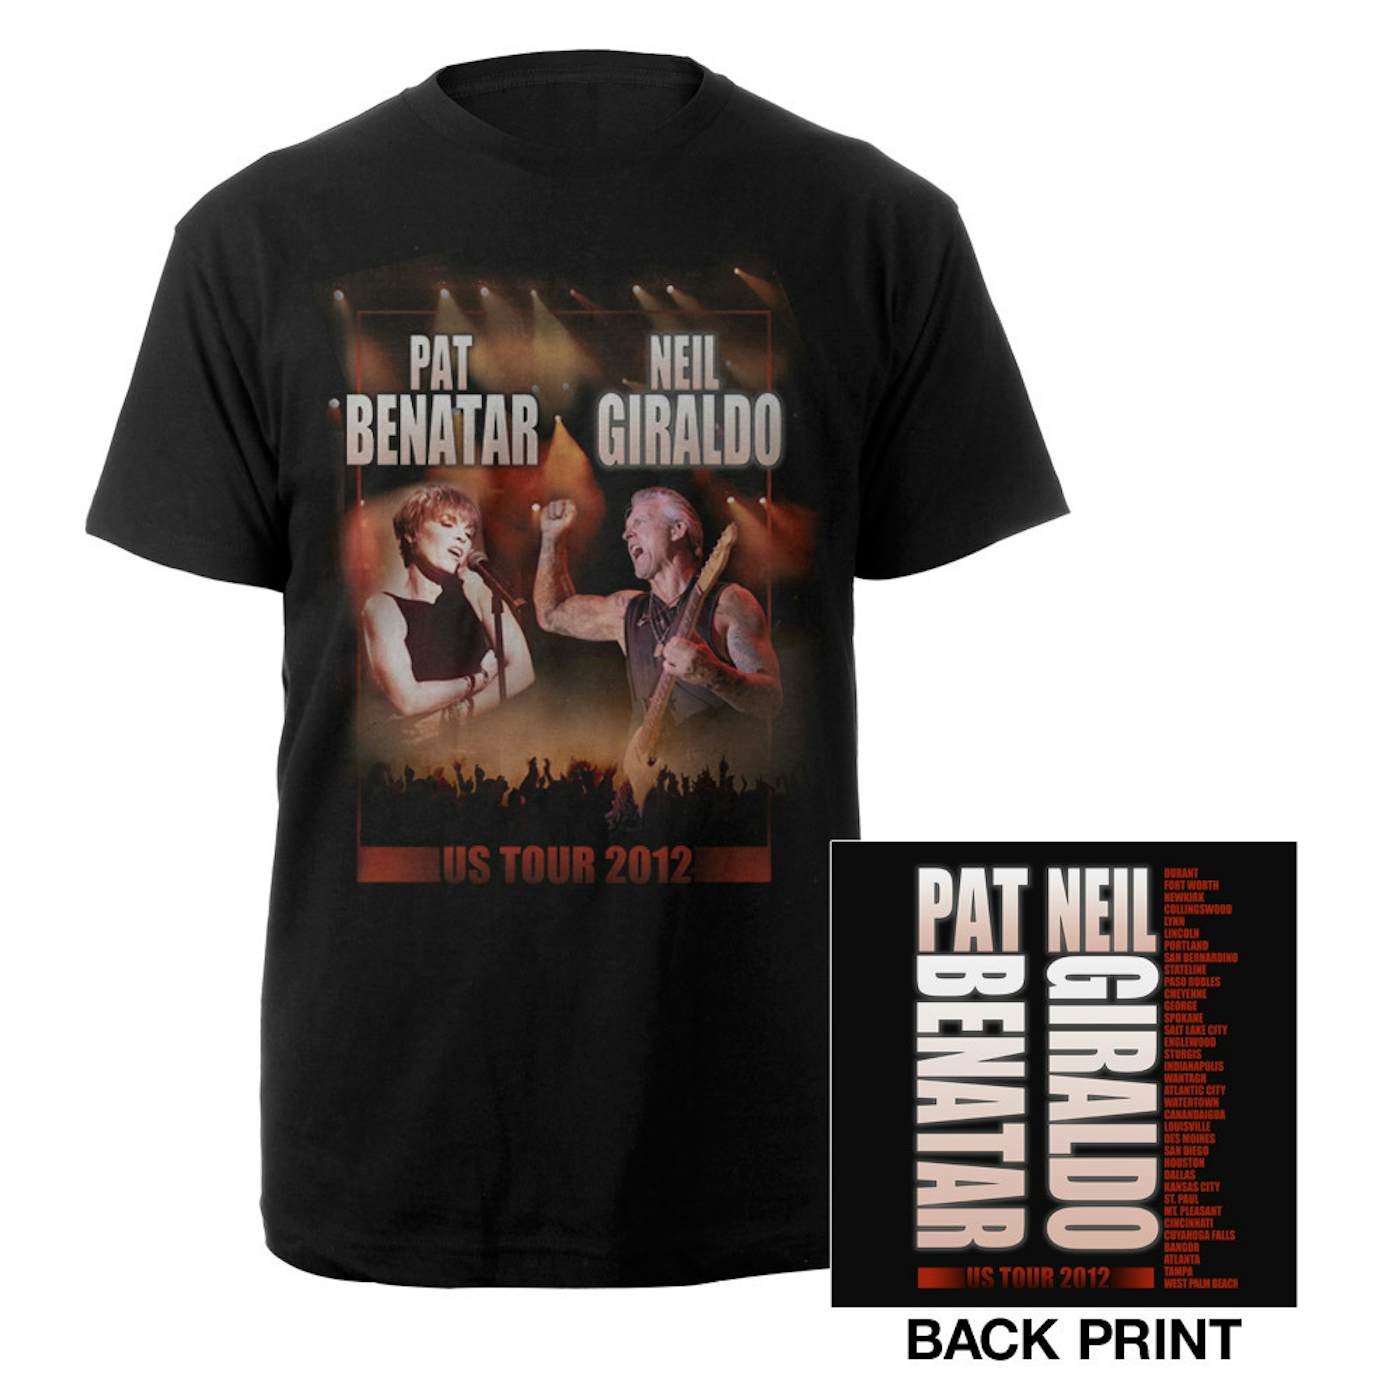 Pat Benatar and Neil Giraldo Live in the US Tour 2012